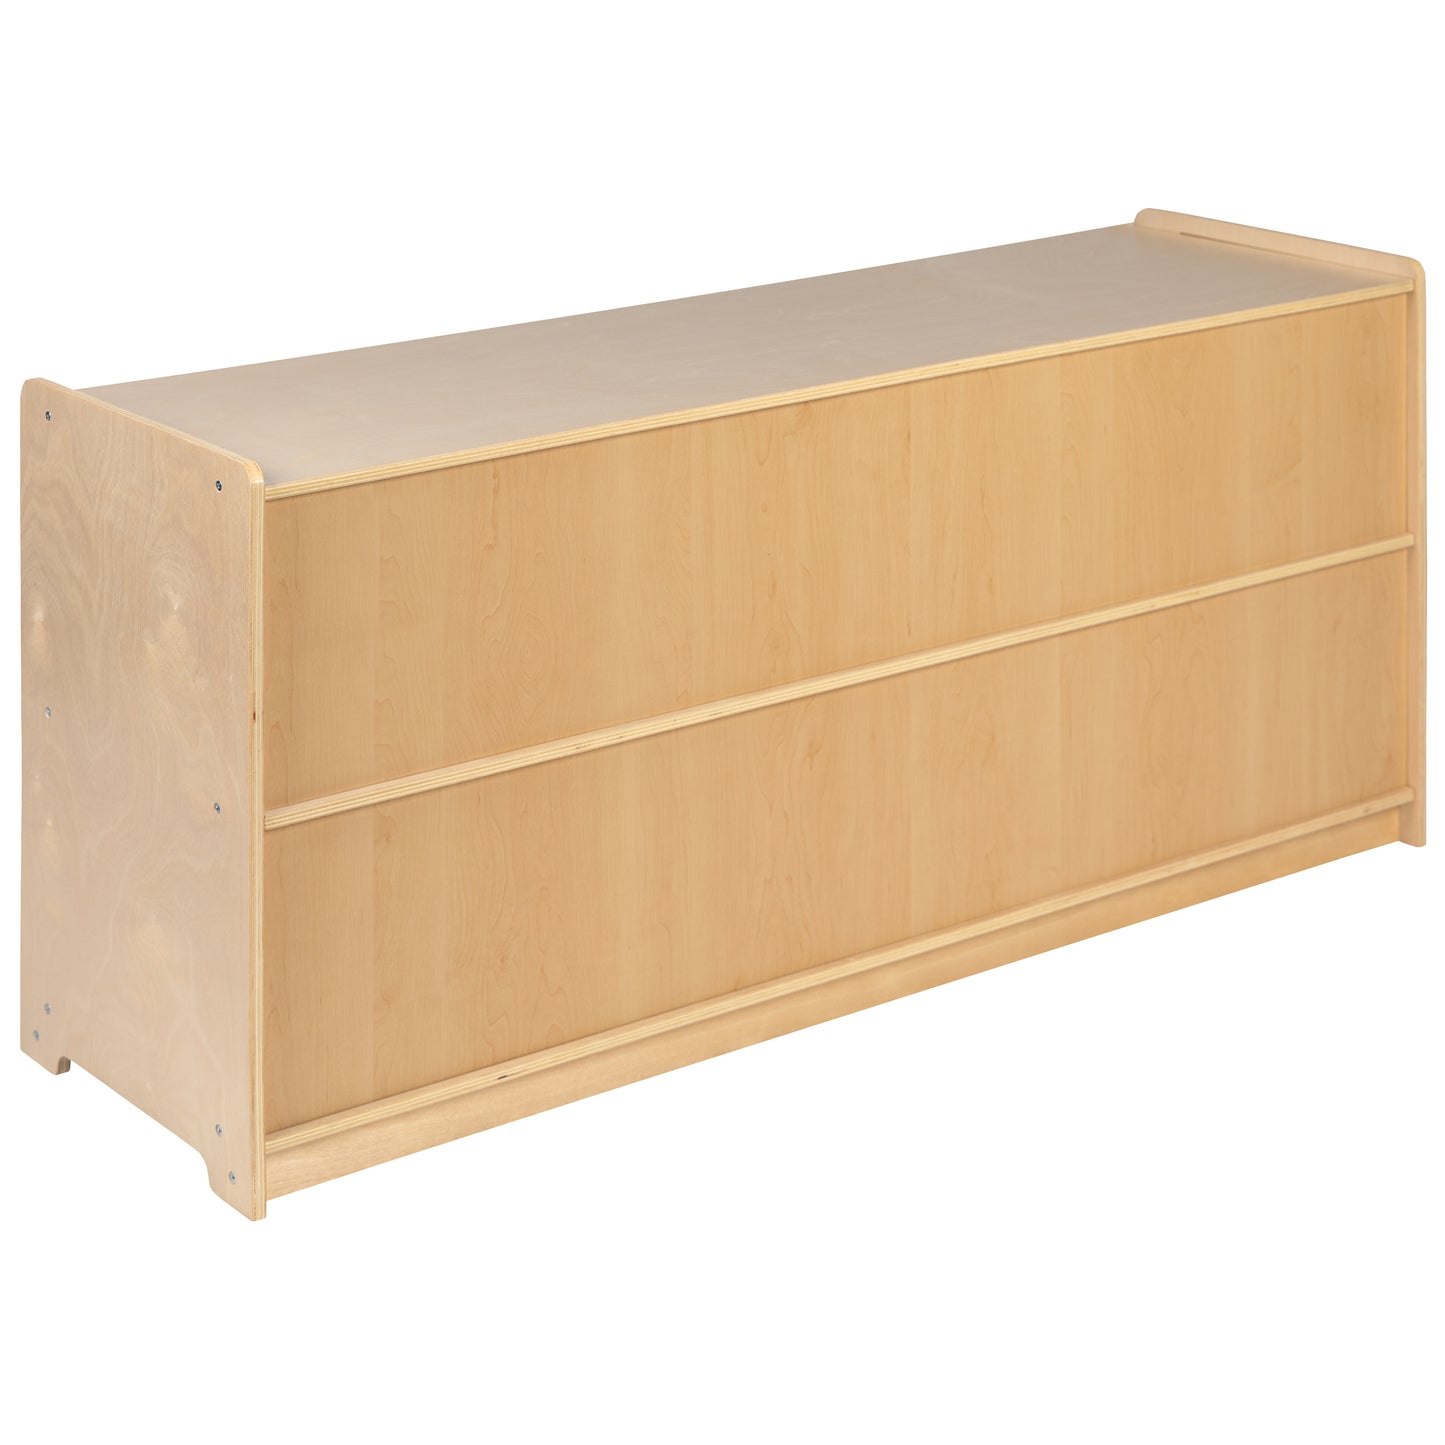 Wood Classroom Storage Cabinet MK-STRG005-GG